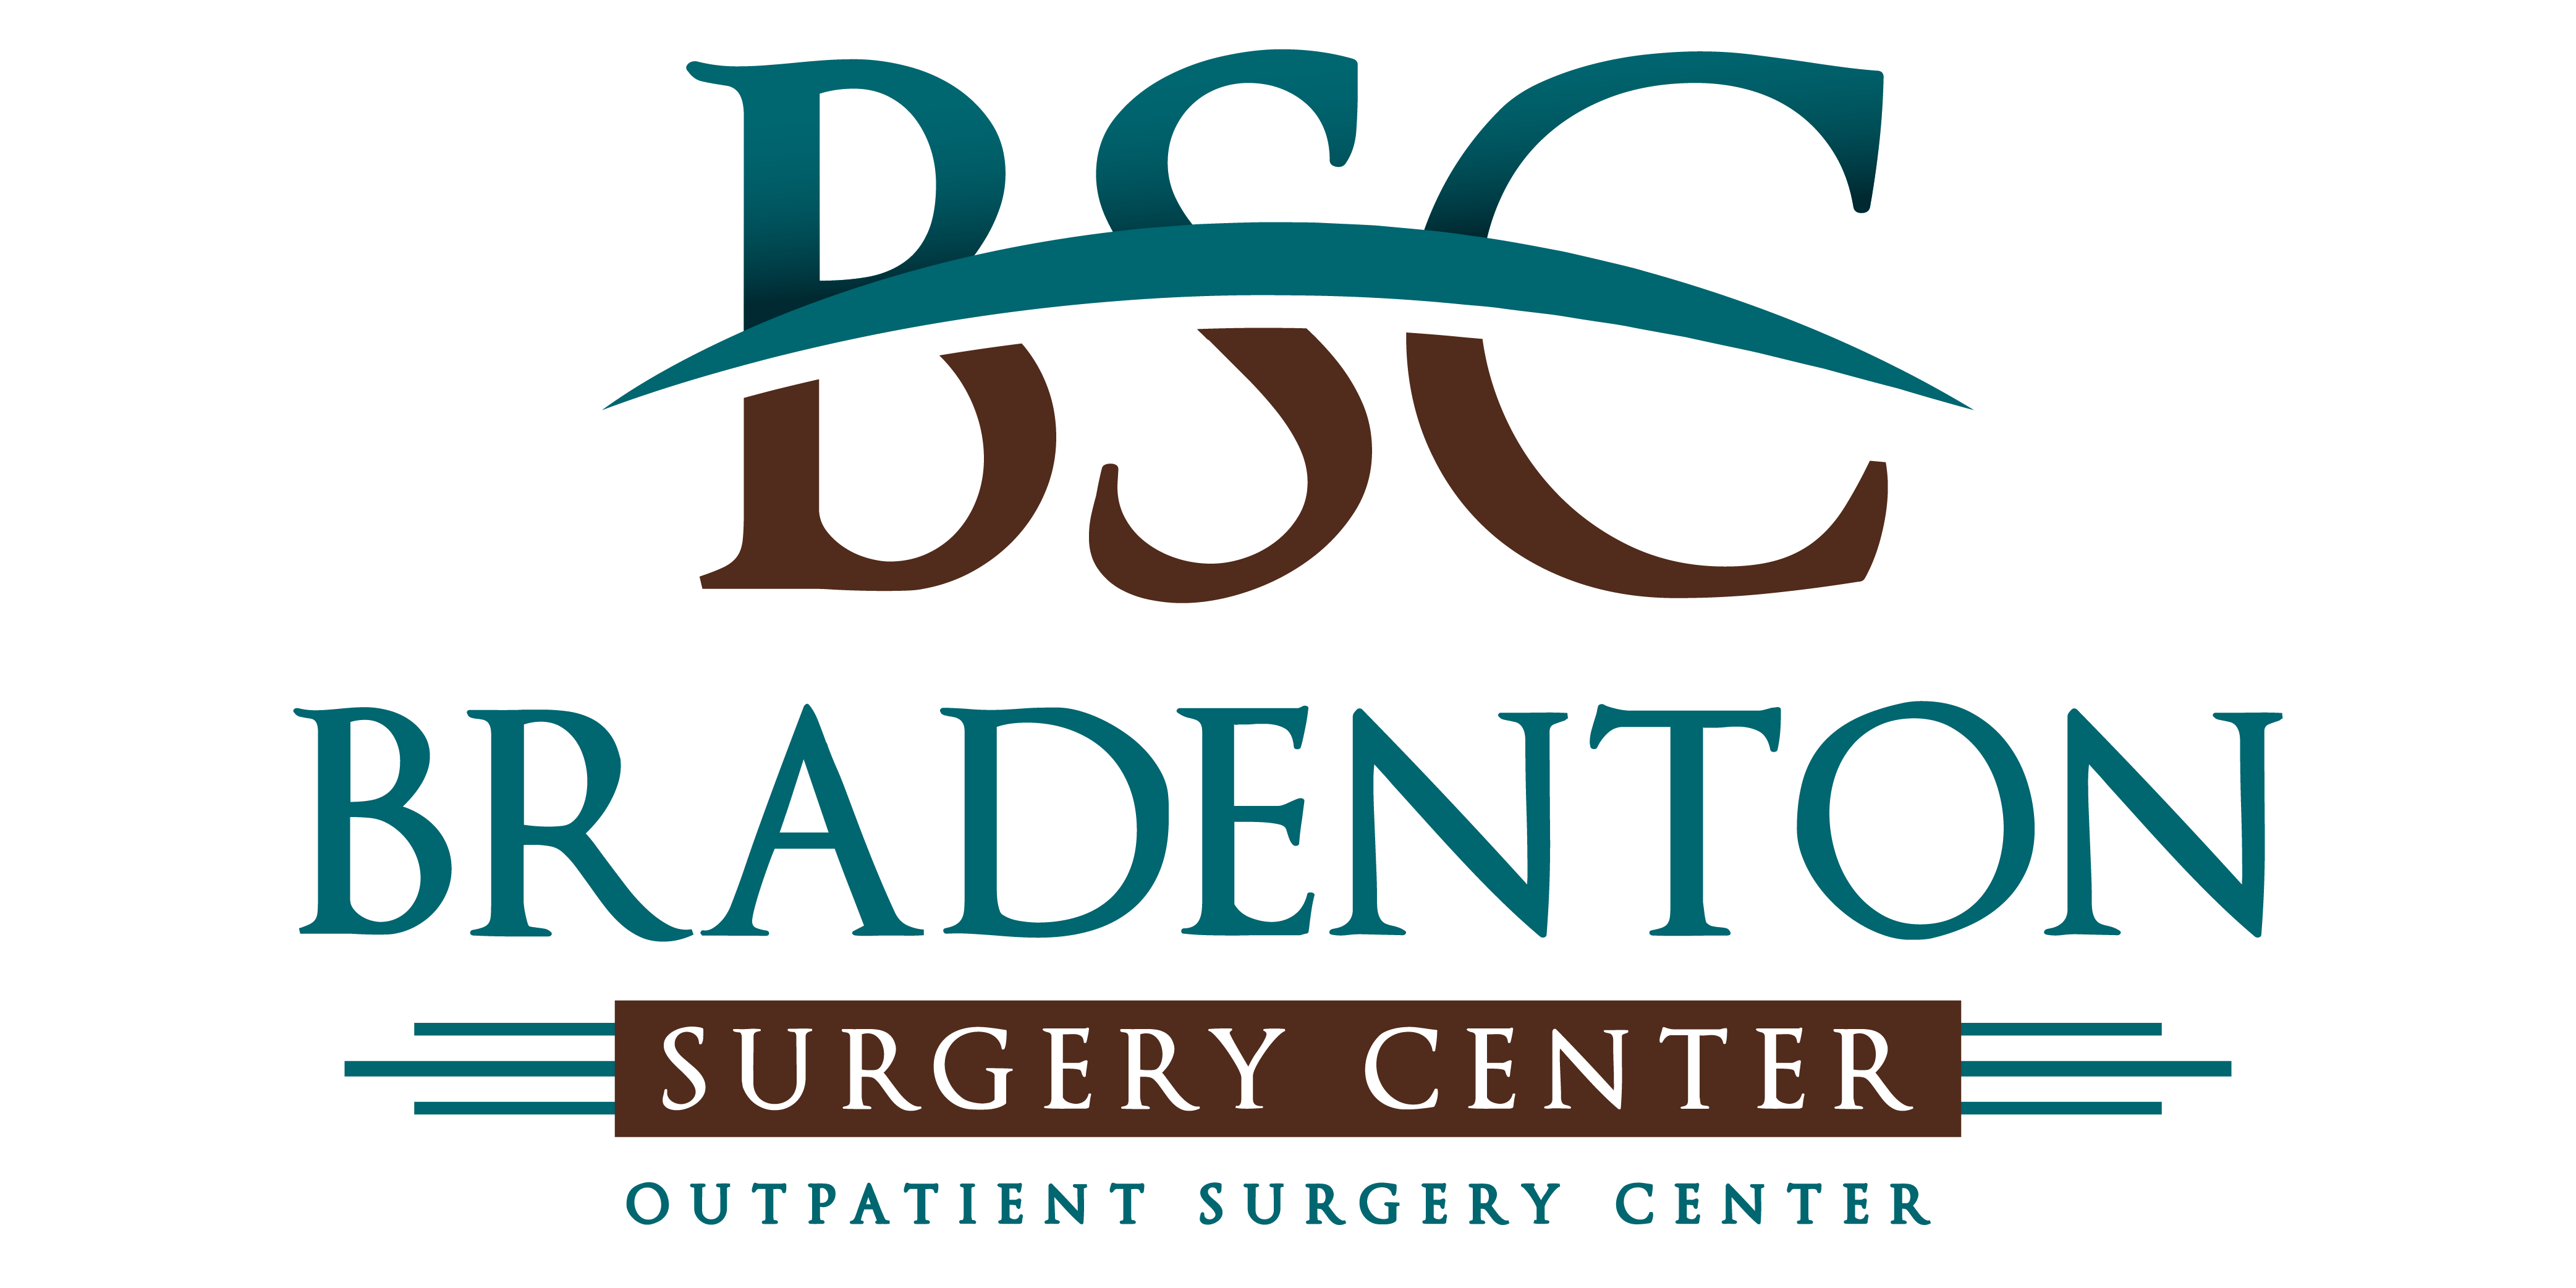 Bradenton Surgery Center